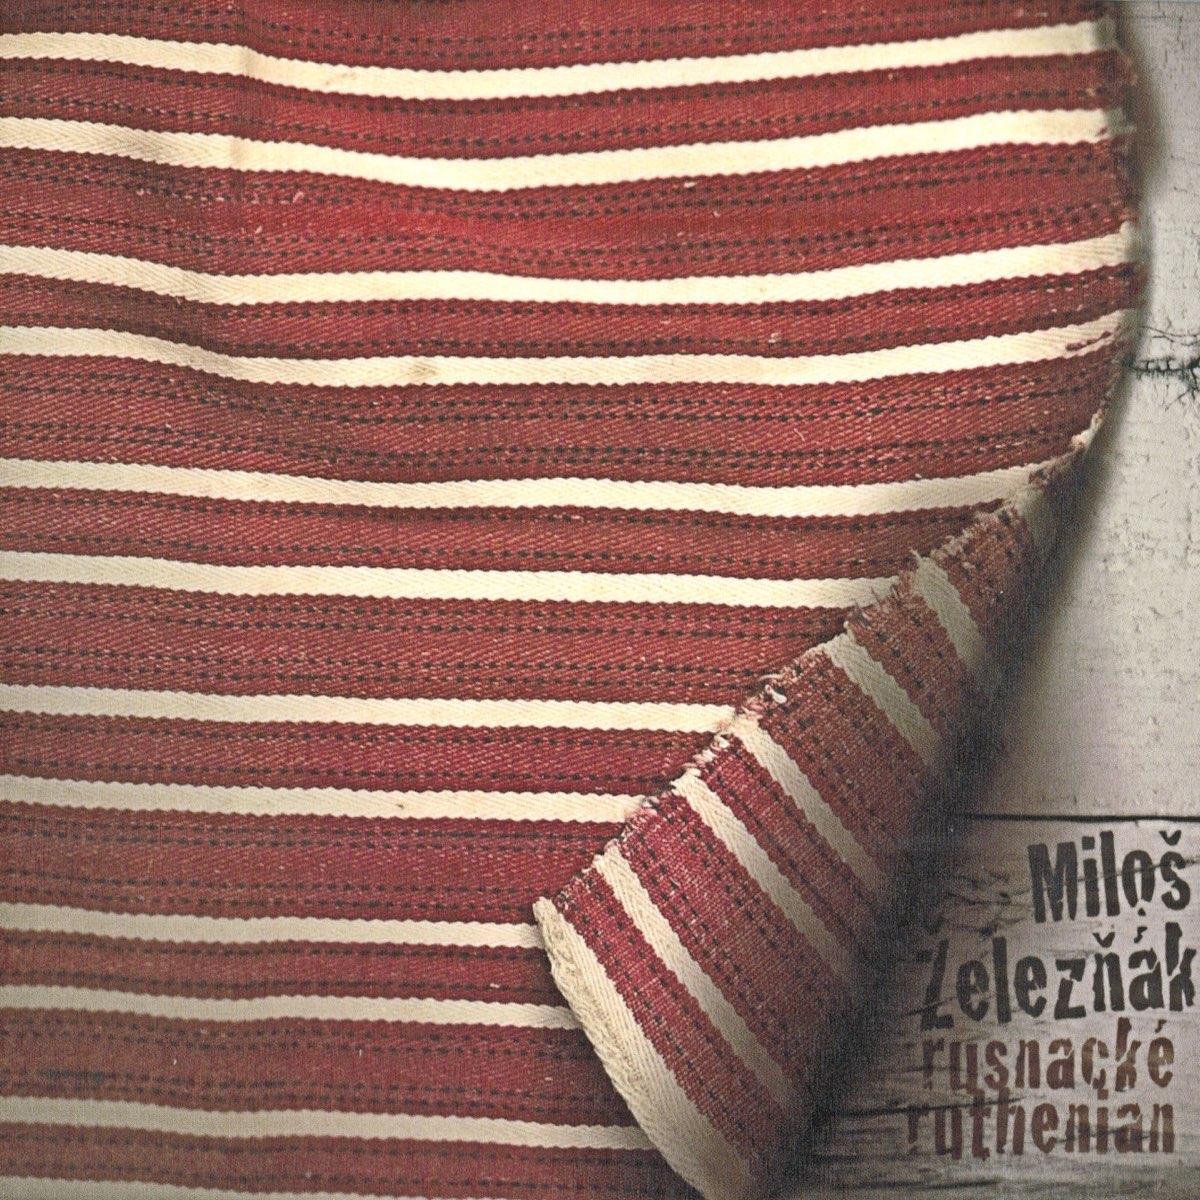 Rusnacke (Ruthenian) by Milos Zeleznak on Apple Music